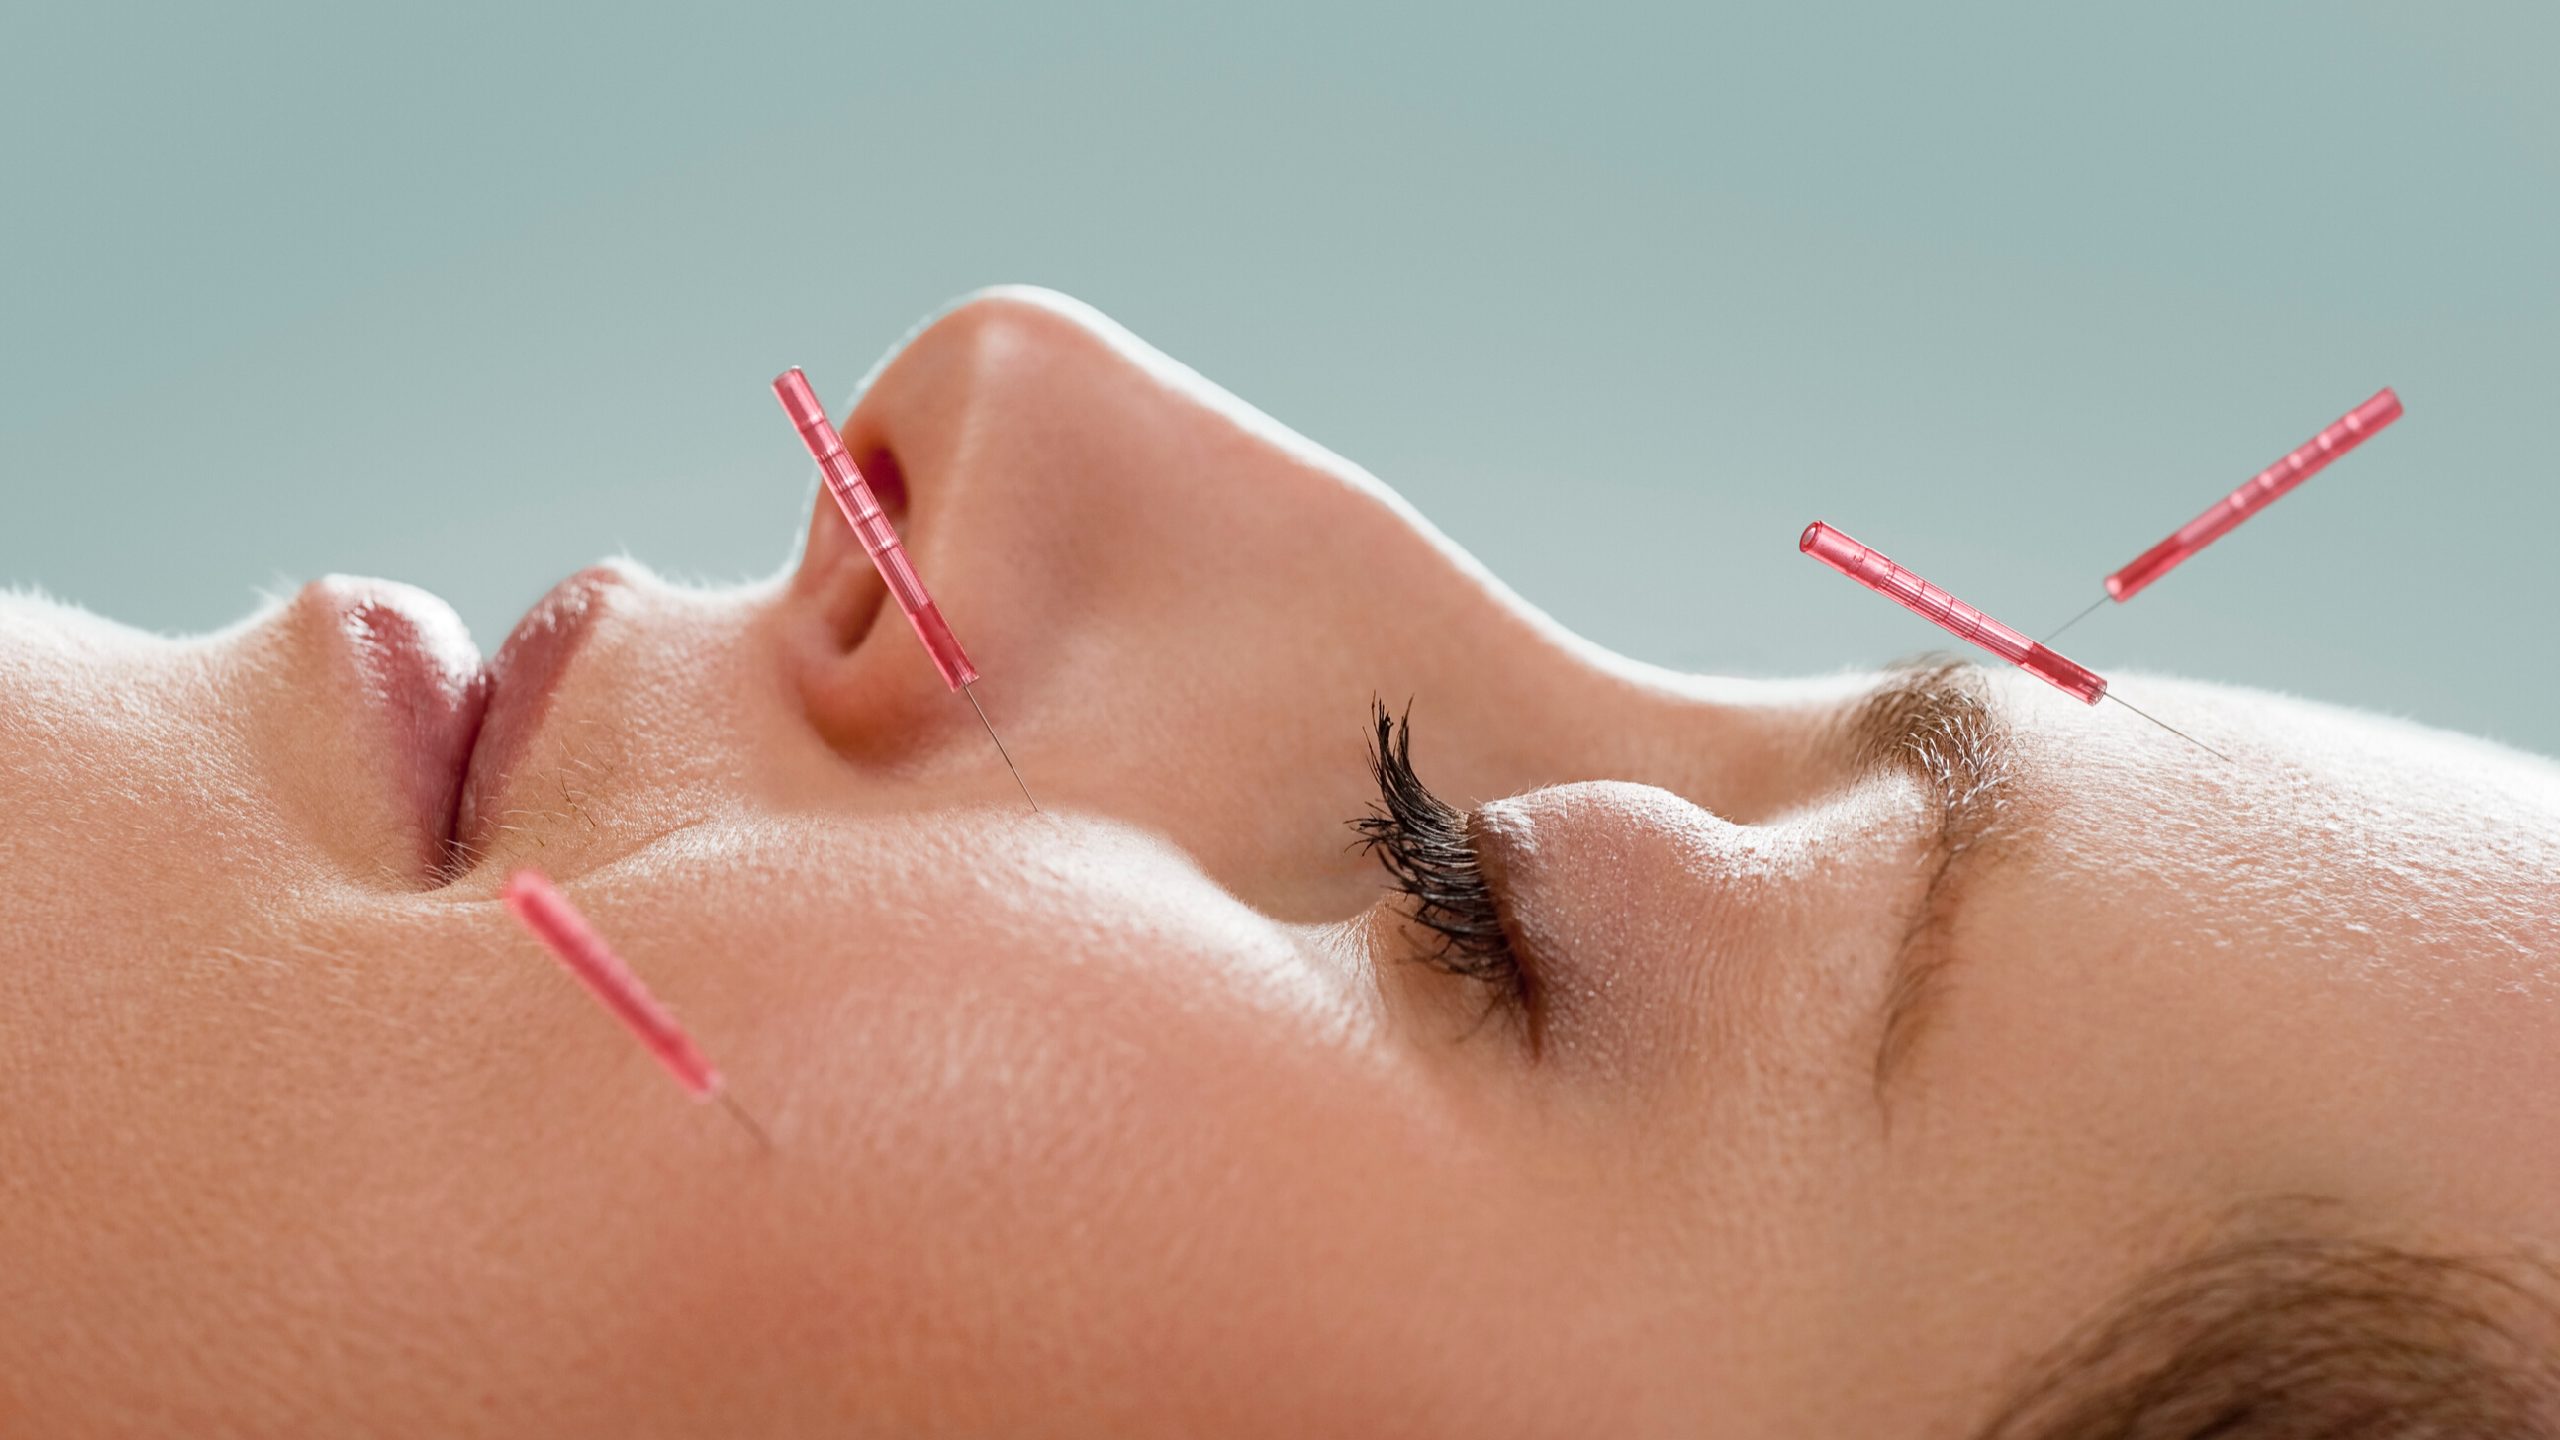 Cosmetic acupuncture